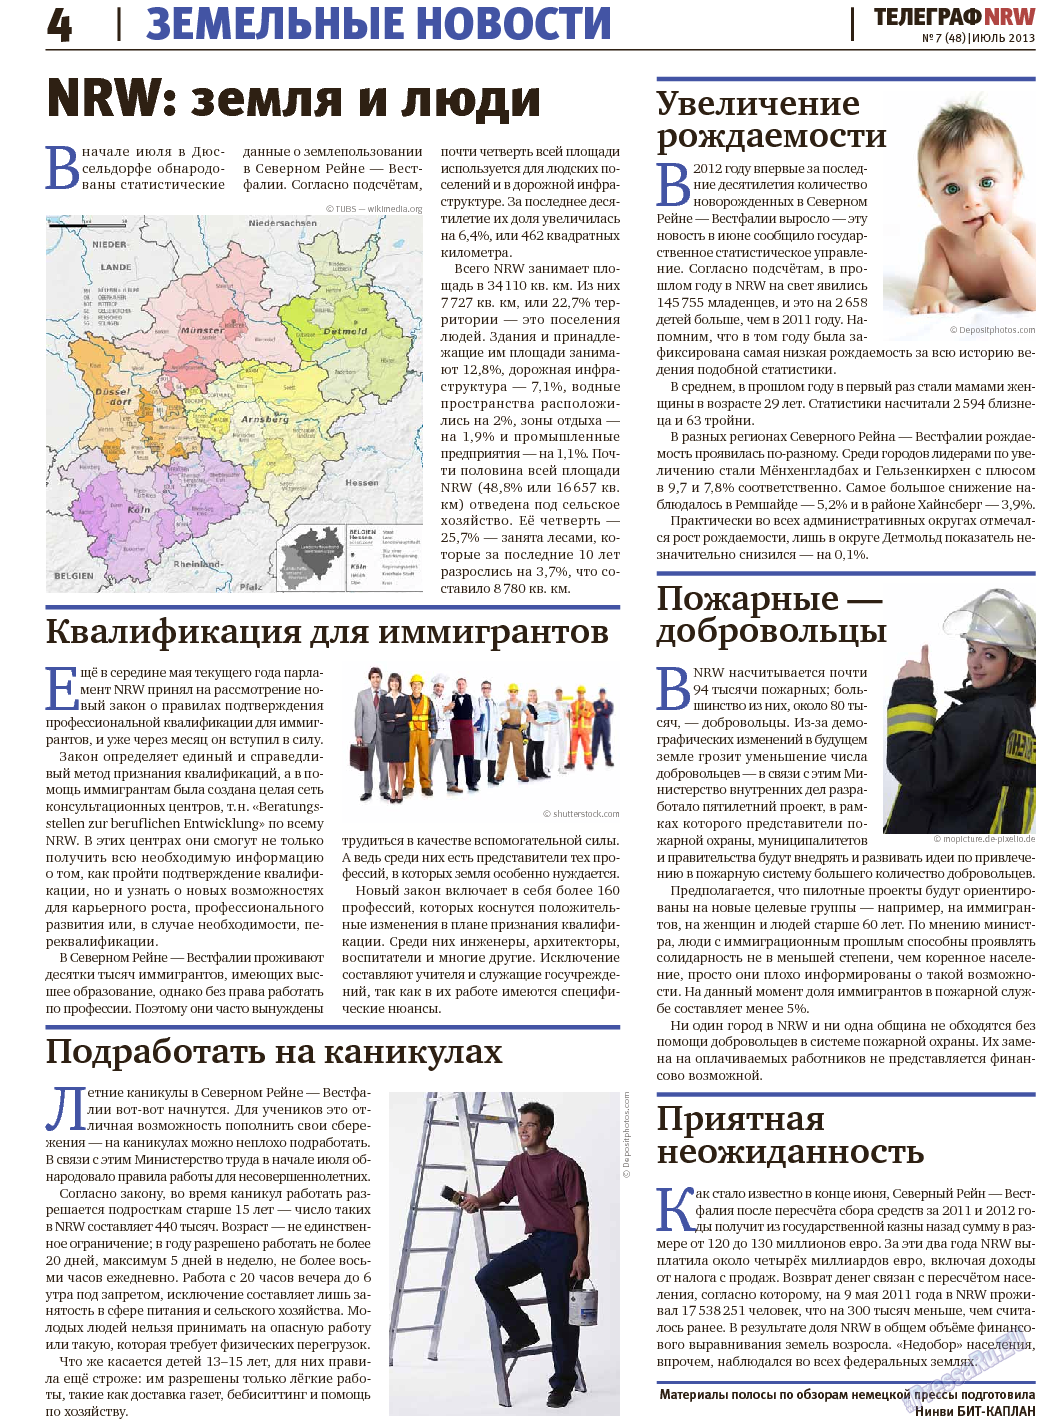 Телеграф NRW, газета. 2013 №7 стр.4